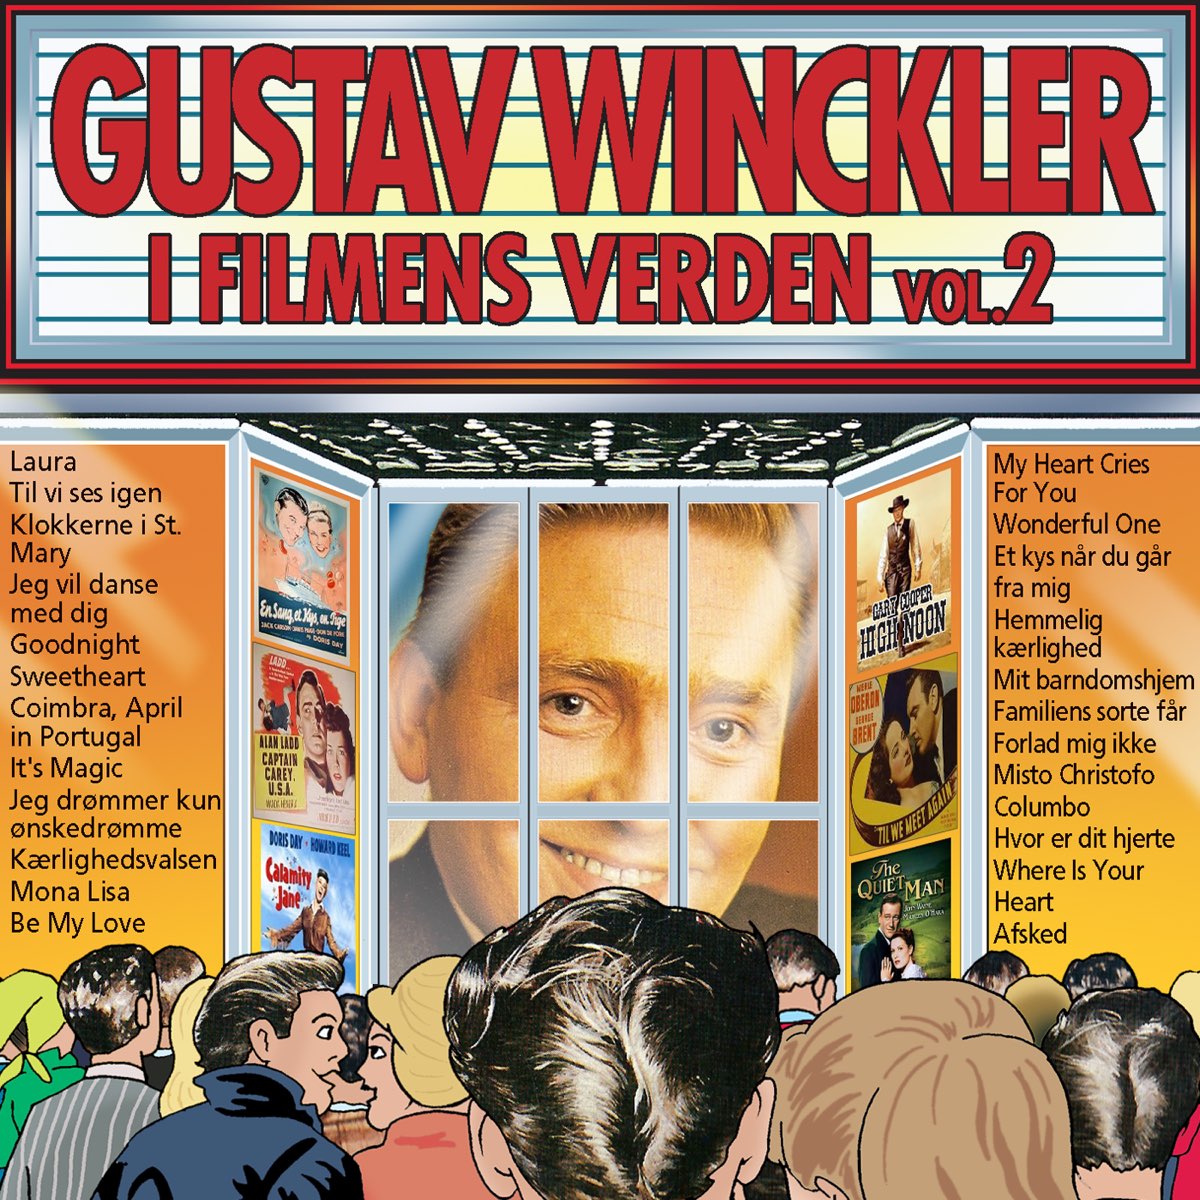 Blåt mærke Korrespondent Diverse I Filmens Verden Vol. 2 (Gustav Winckler I Filmens Verden Vol. 2) by Gustav  Winckler on Apple Music